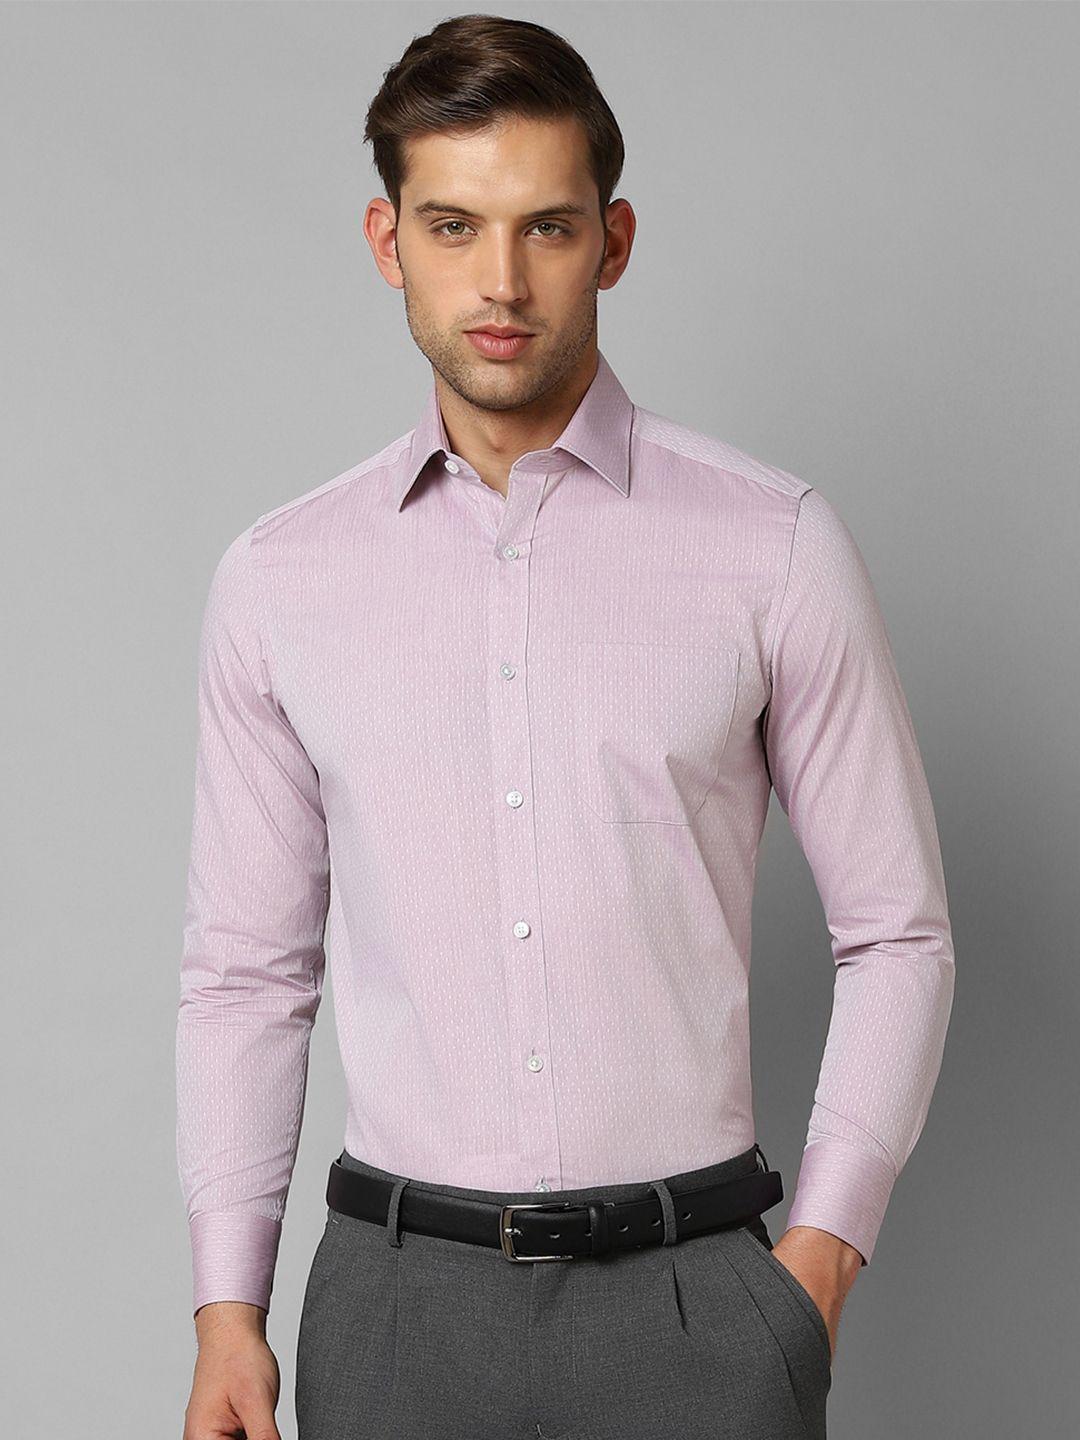 louis-philippe-slim-fit-self-design-pure-cotton-formal-shirt